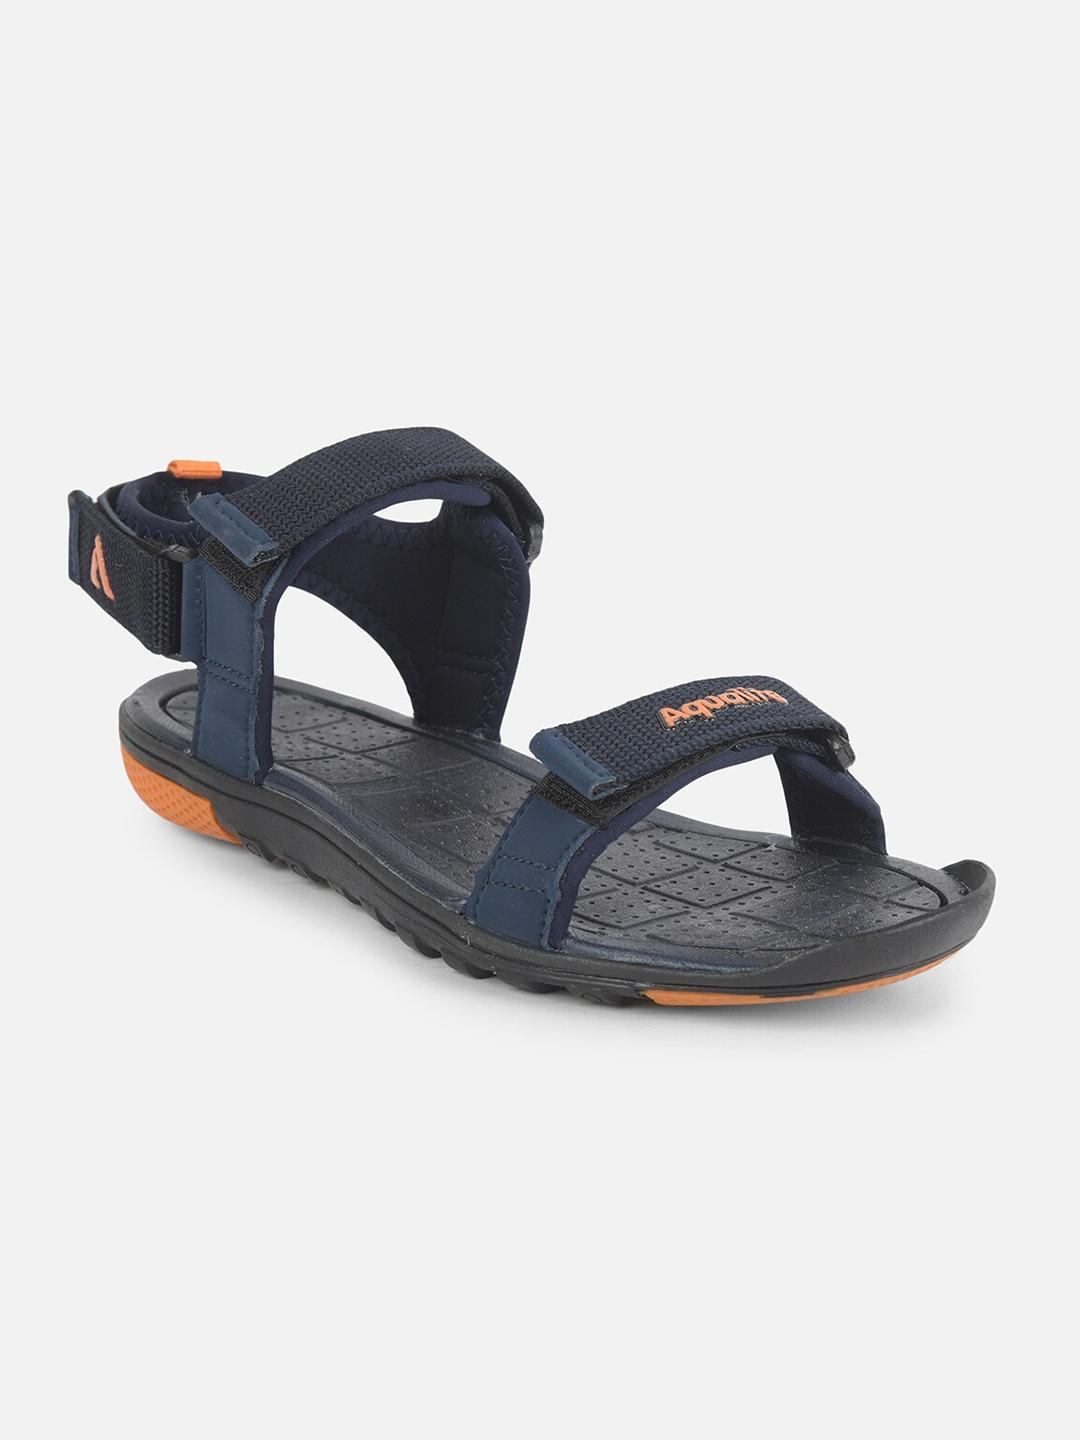 Aqualite Men Navy Blue & Orange Sport Sandals